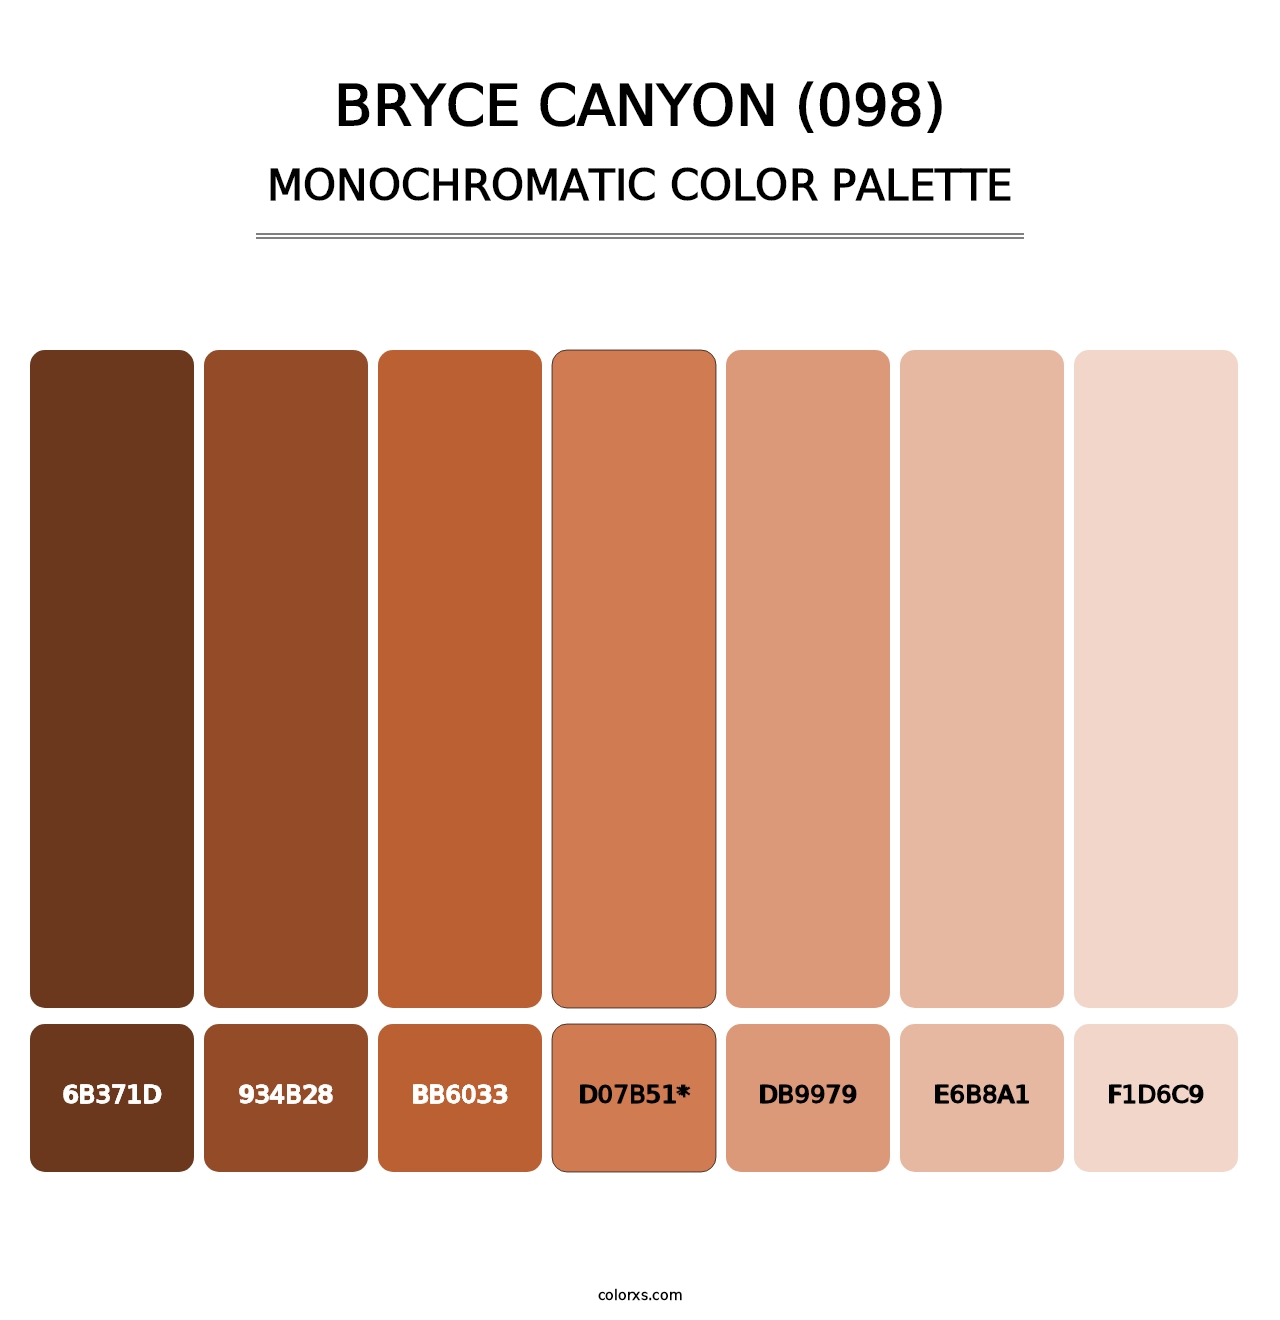 Bryce Canyon (098) - Monochromatic Color Palette